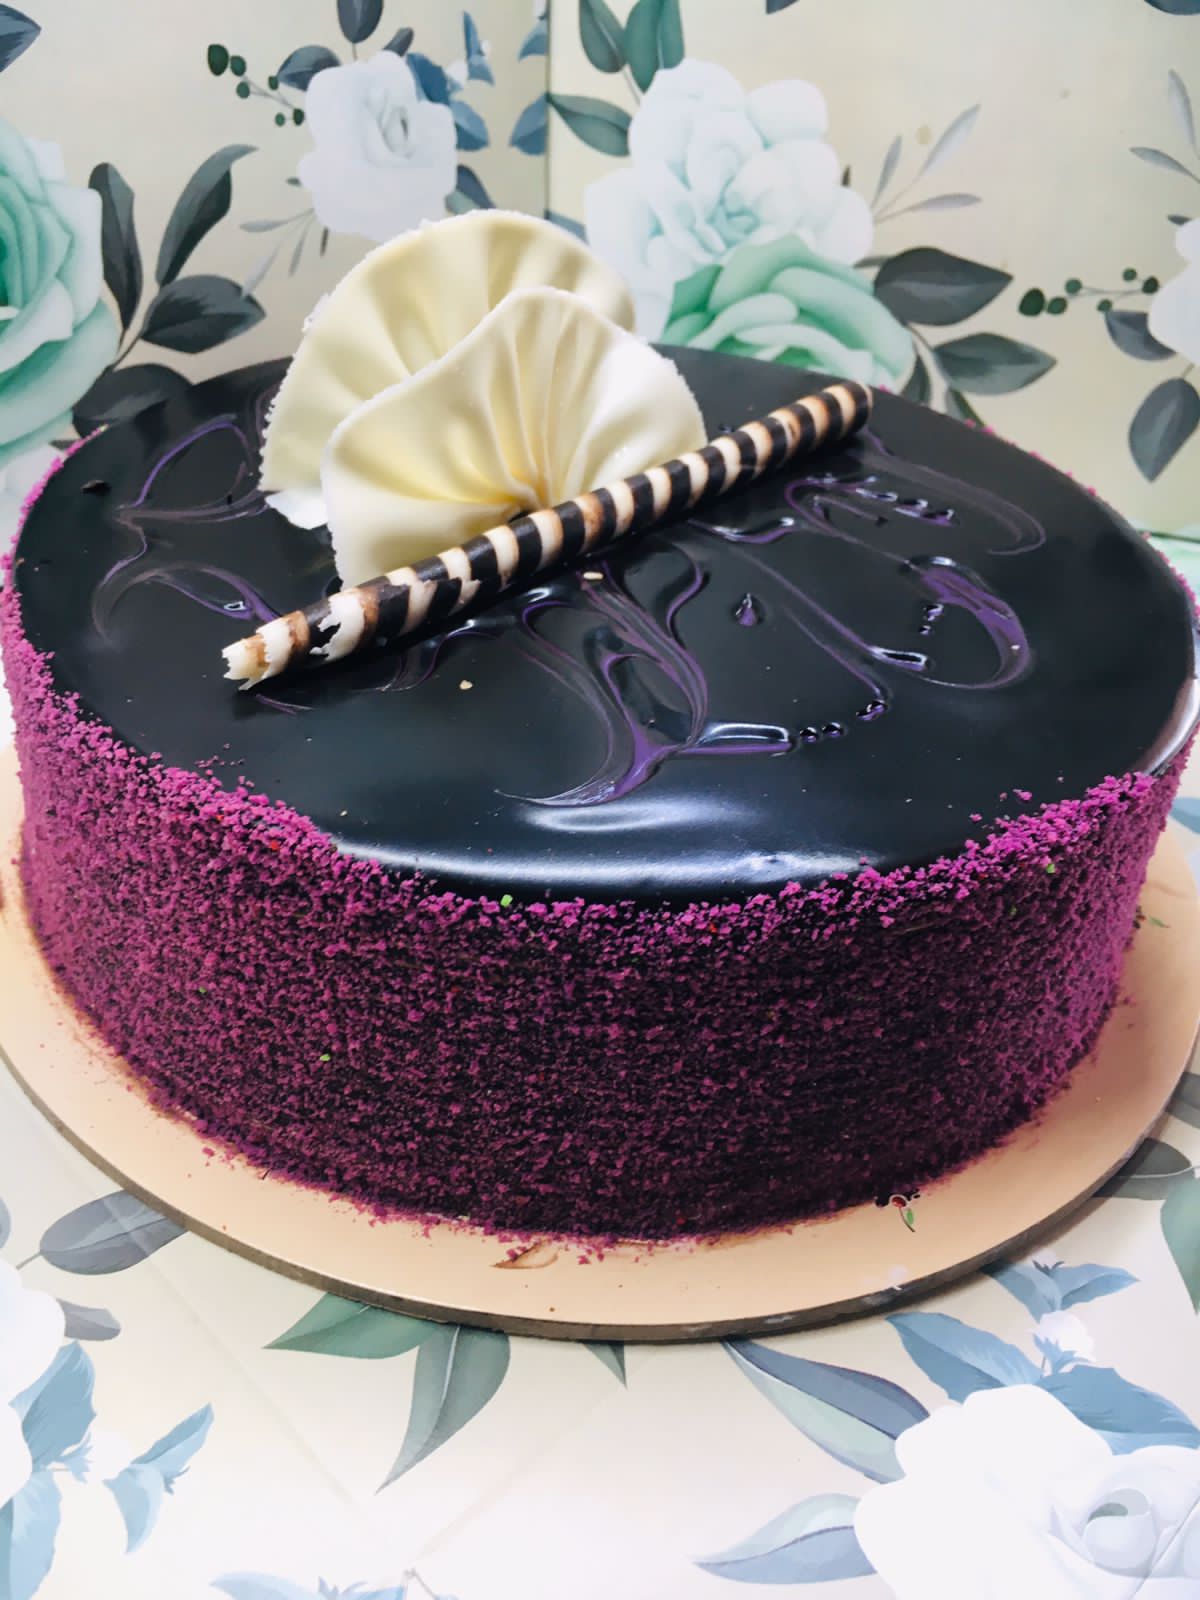 Mini Purple Cake Cikarang November 23rd Stock Photo 2231998859 |  Shutterstock